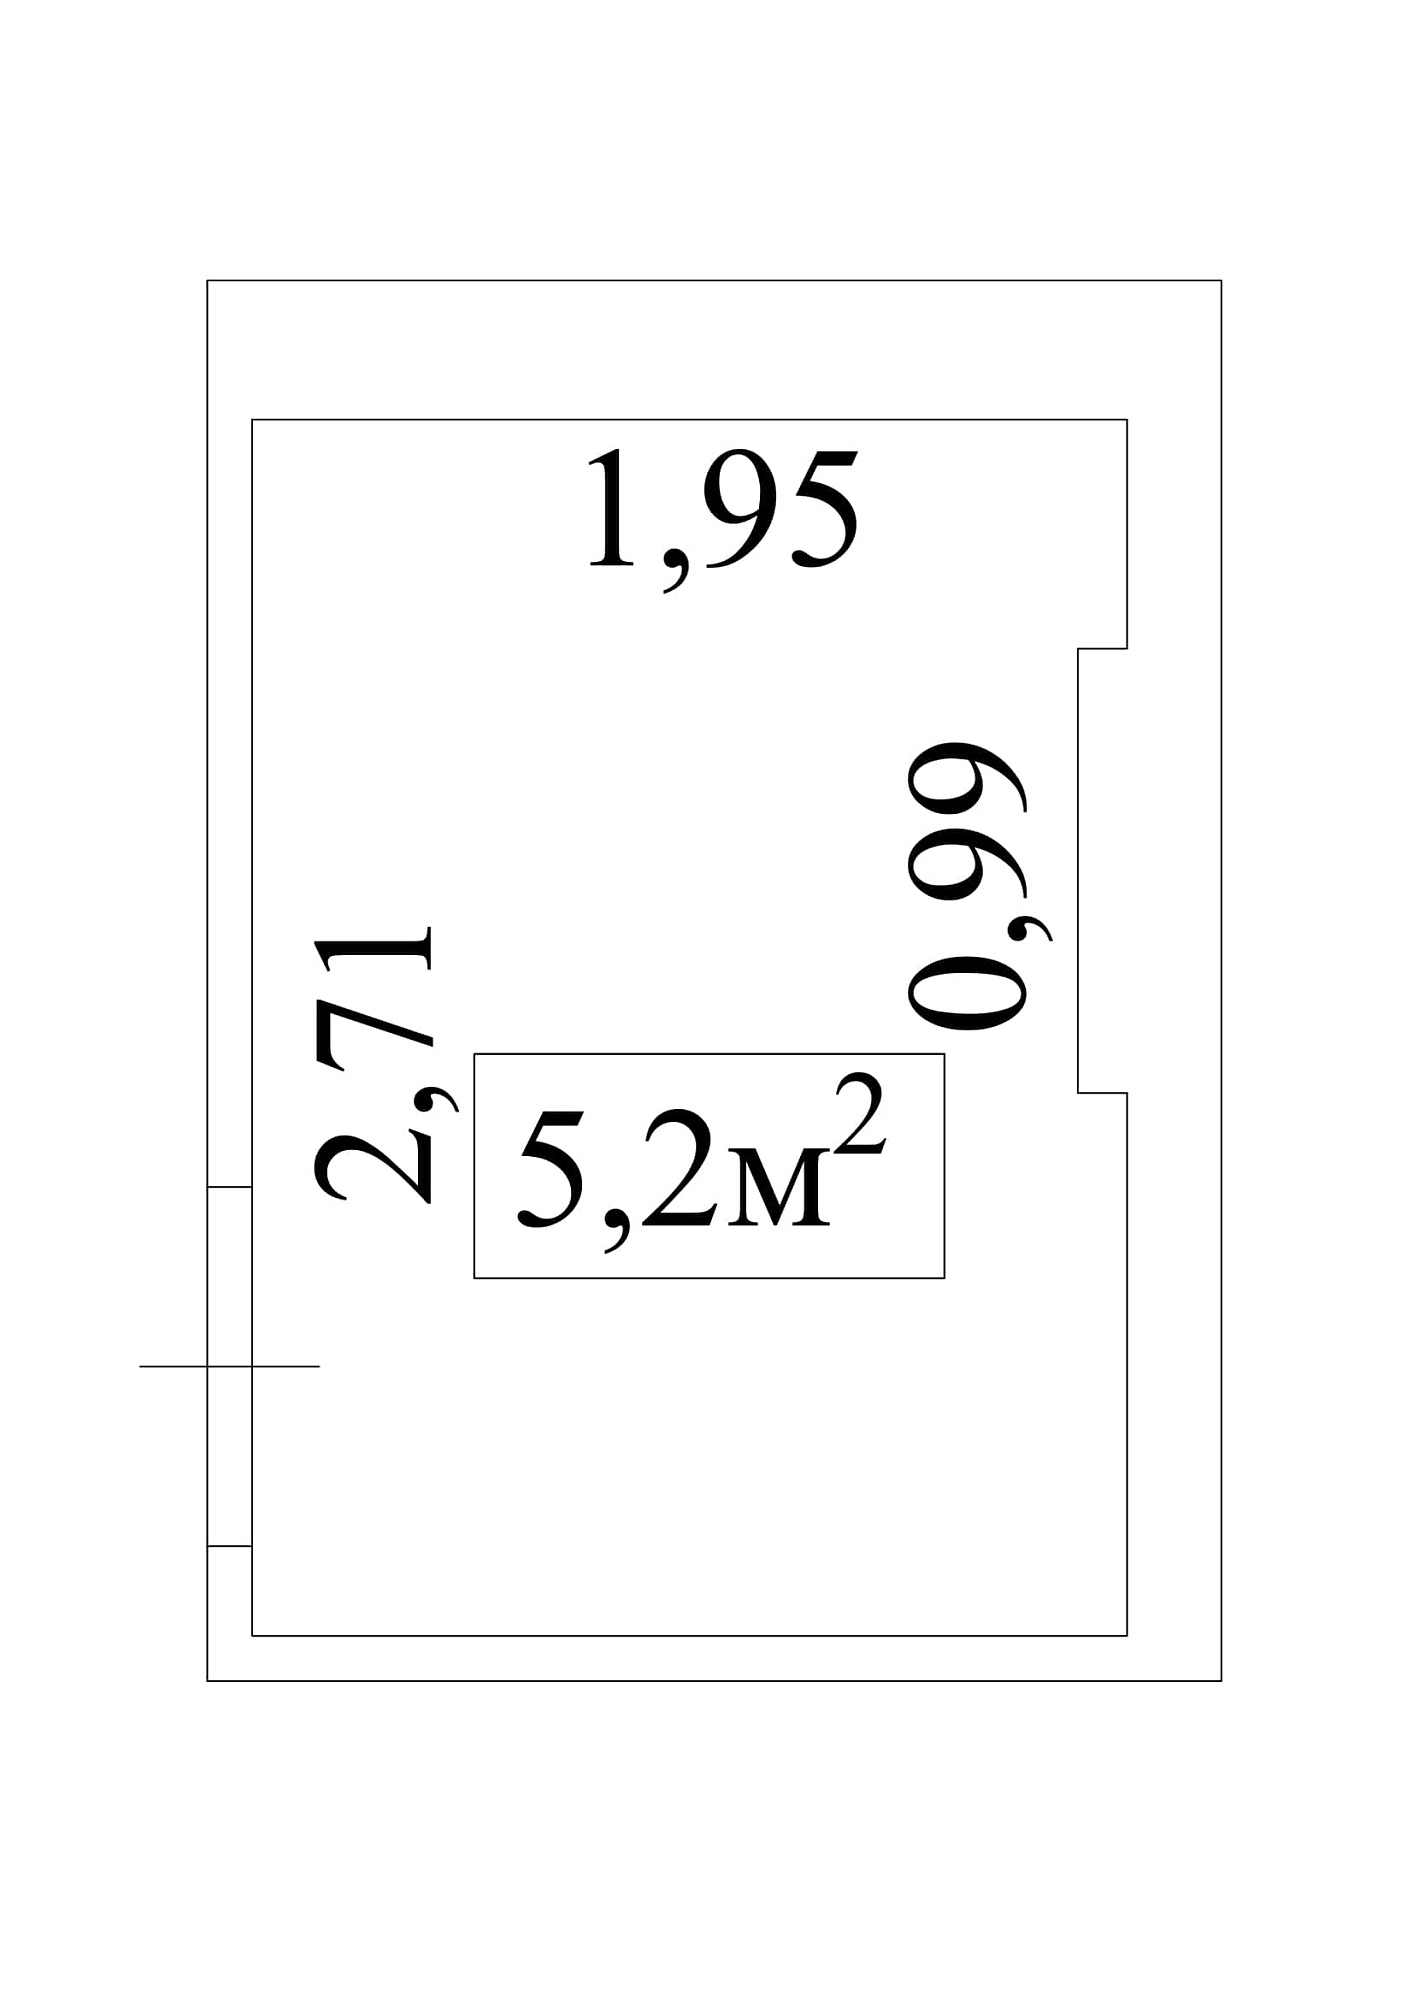 Planning Storeroom area 5.2m2, AB-01-м1/К0021.